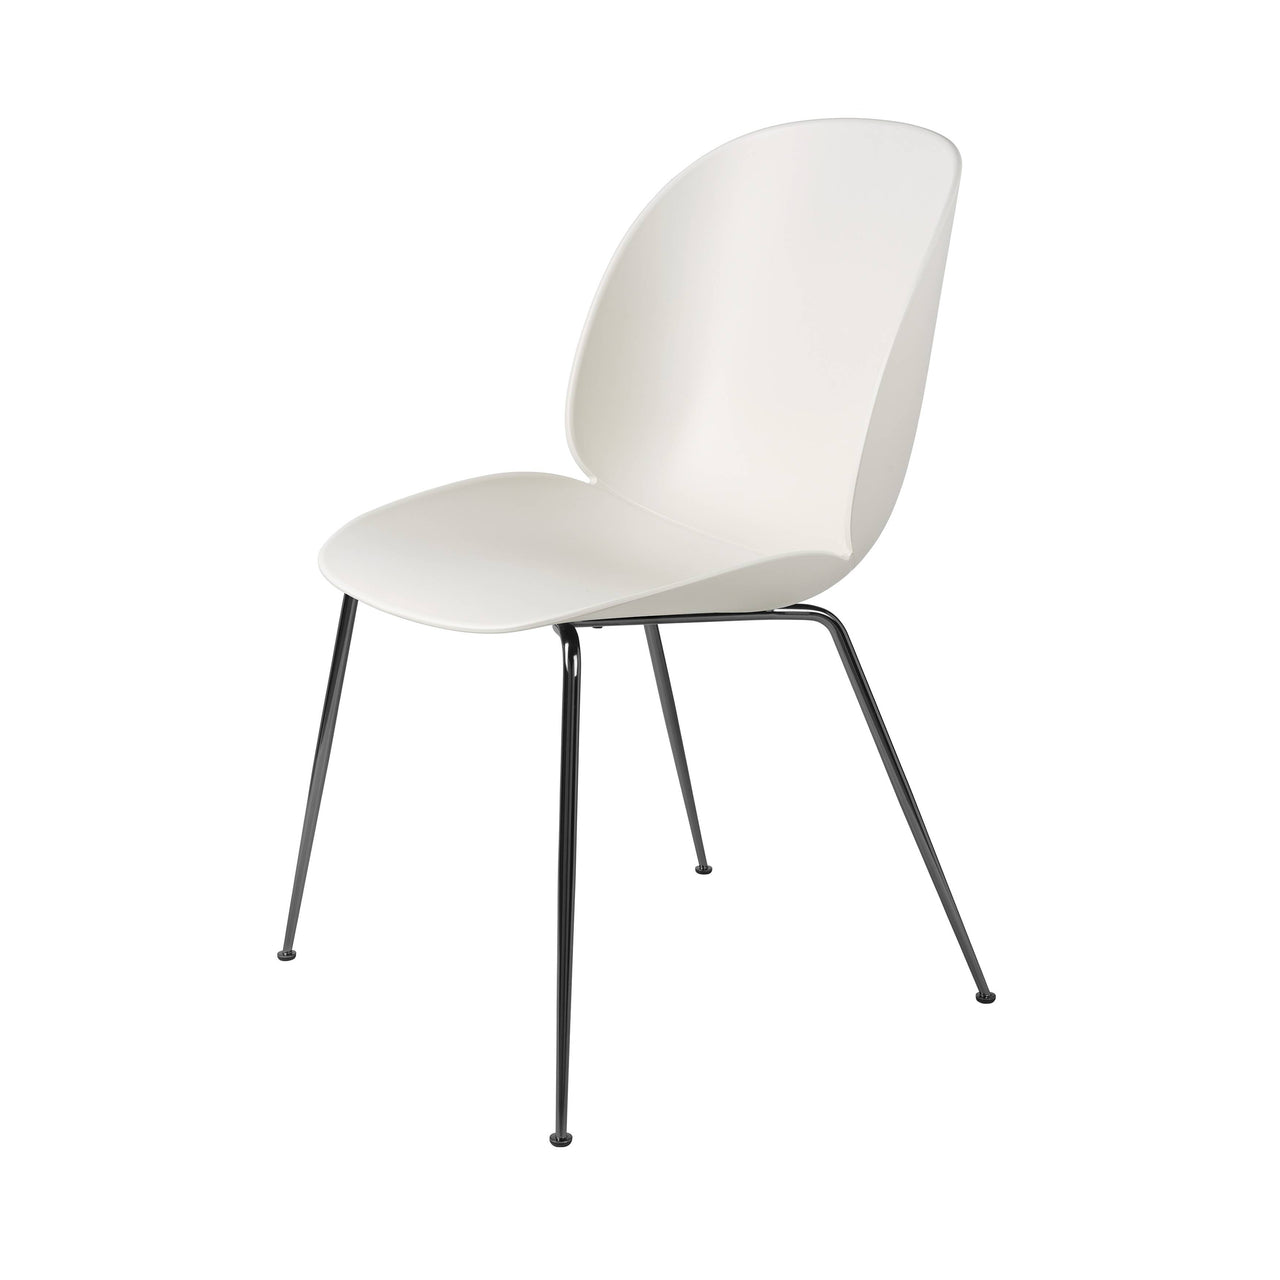 Beetle Dining Chair: Conic Base + Alabaster White + Black Chrome + Felt Glides